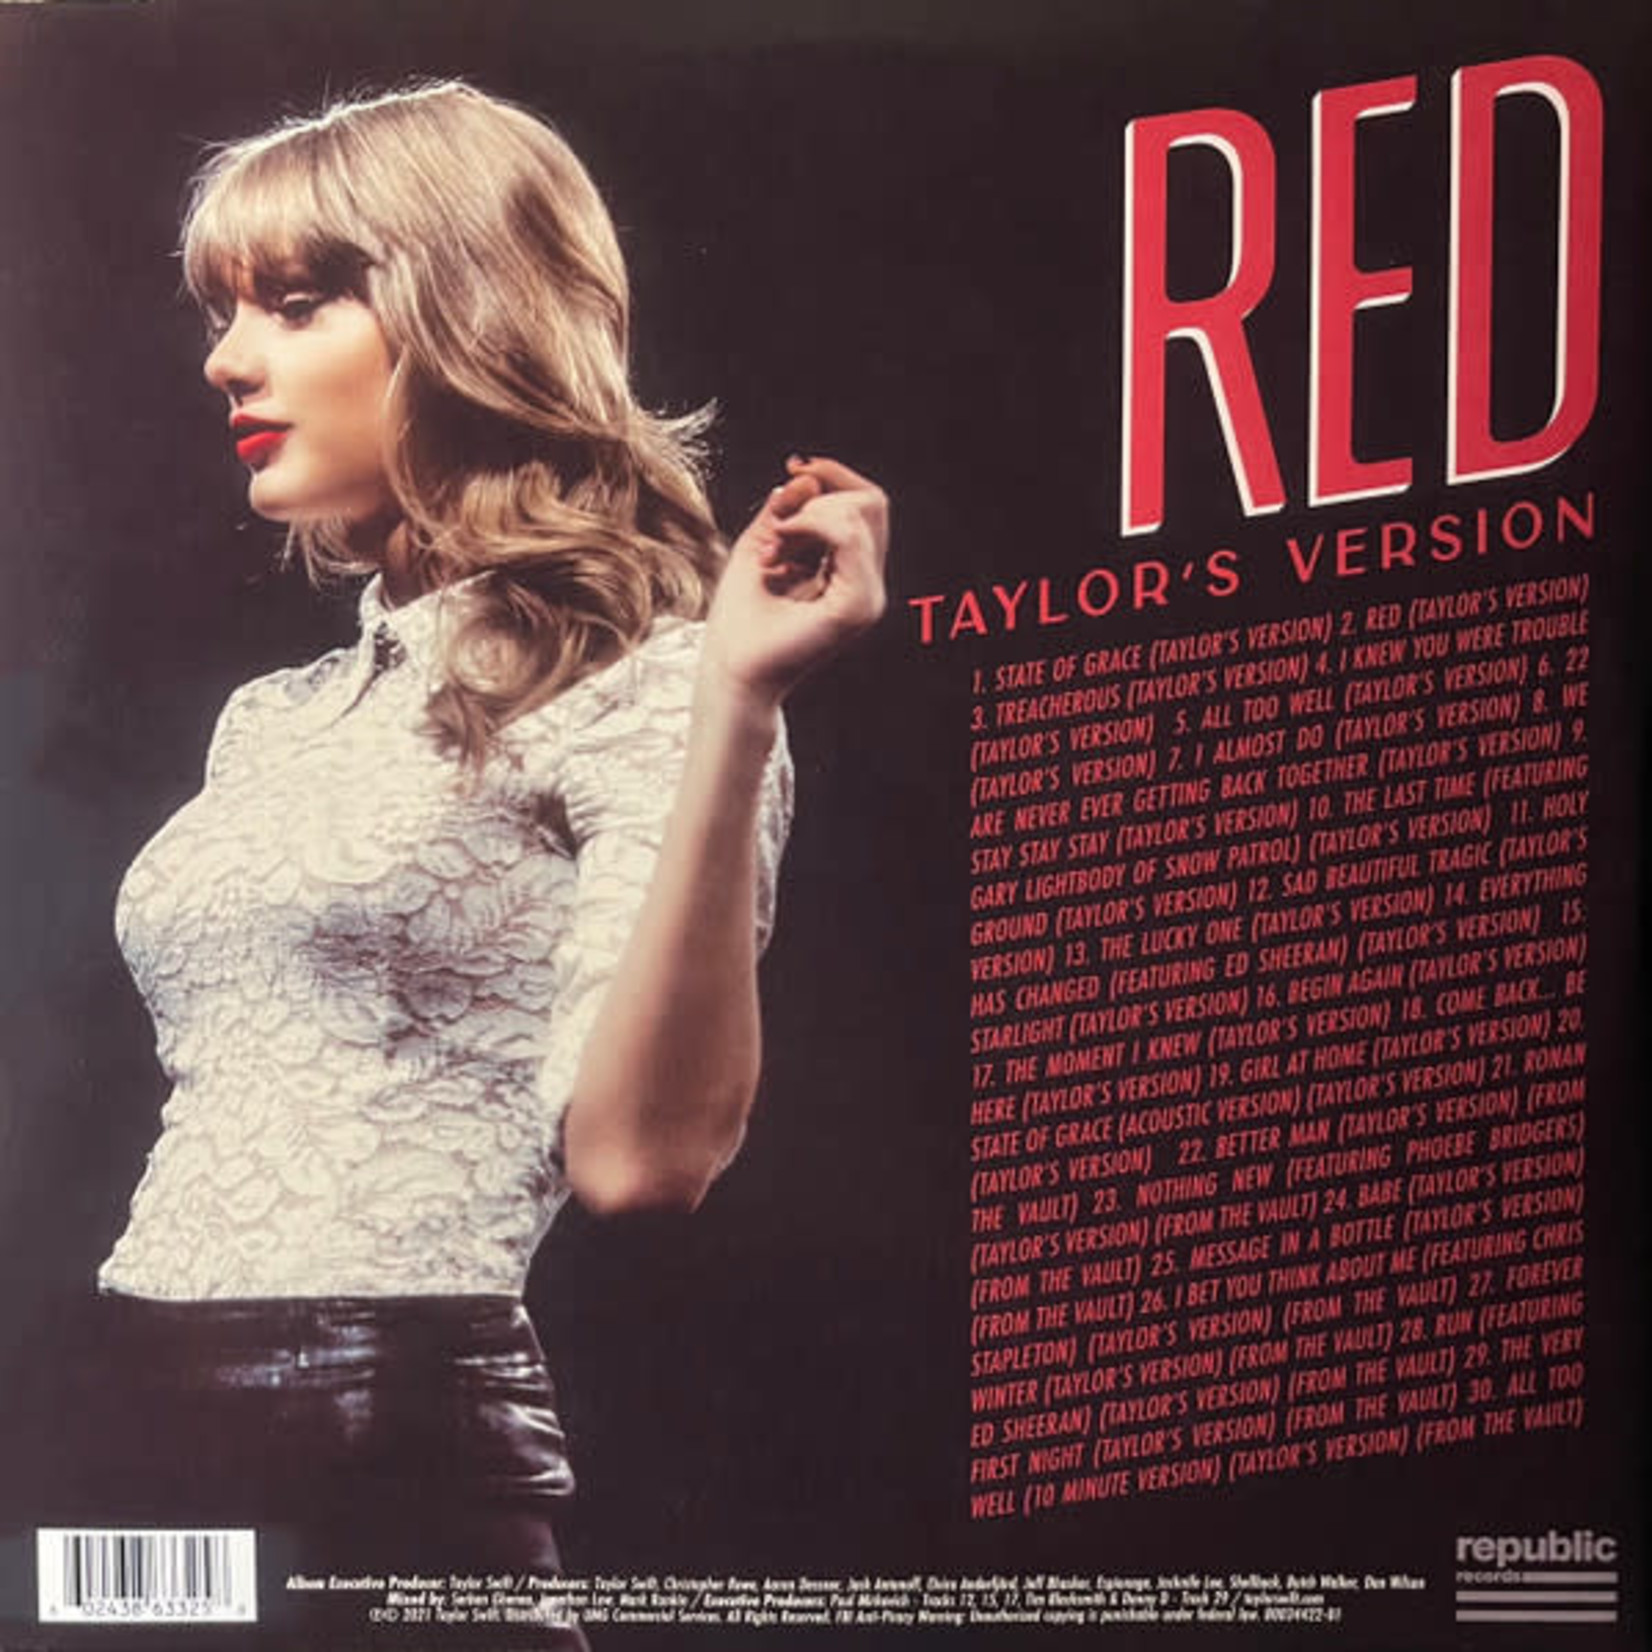 Тейлор версия. Виниловая пластинка Taylor Swift. Folklore. Taylor Swift винил купить. Red Taylor's Version. Альбом Свифт Red TV обложка.